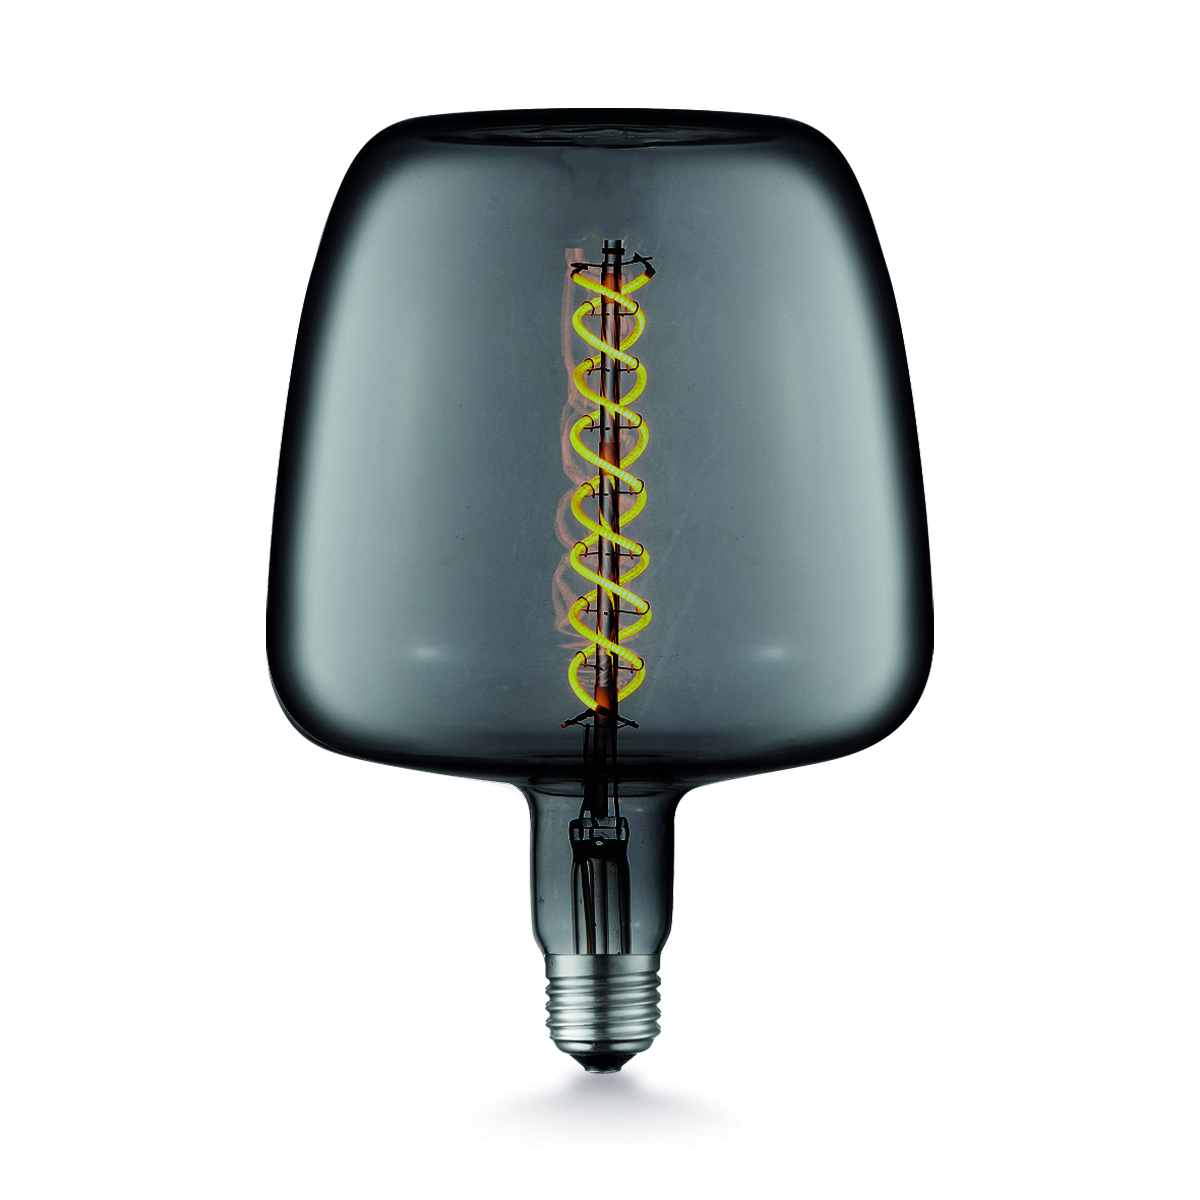 Tangla lighting - TLB-8060-06TM - LED Light Bulb Double Spiral filament - special 4W titanium - jar - dimmable - E27